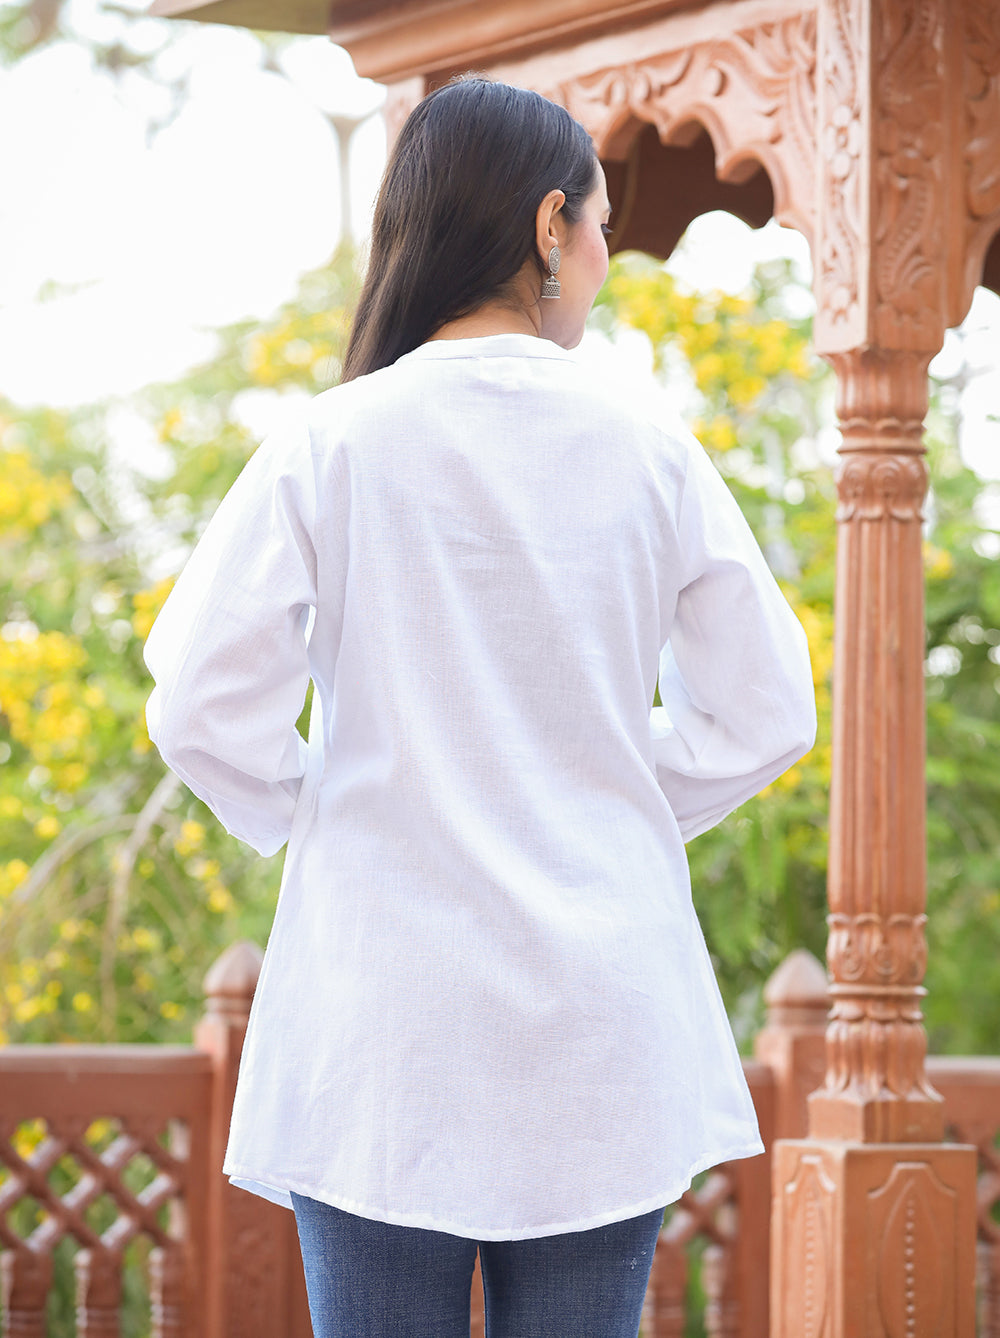 Women's Pastel White Cotton Tunic Top - KAAJH